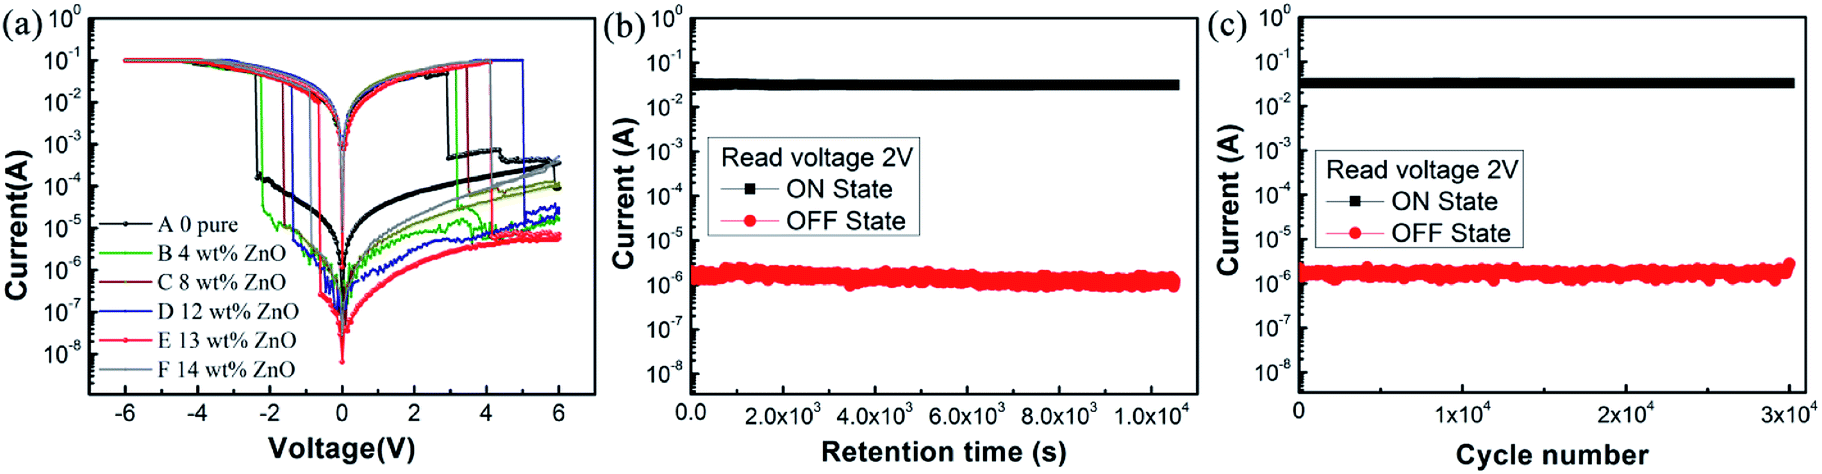 Bistable Non Volatile Resistive Memory Devices Based On Zno Nanoparticles Embedded In Polyvinylpyrrolidone Rsc Advances Rsc Publishing Doi 10 1039 D0raj